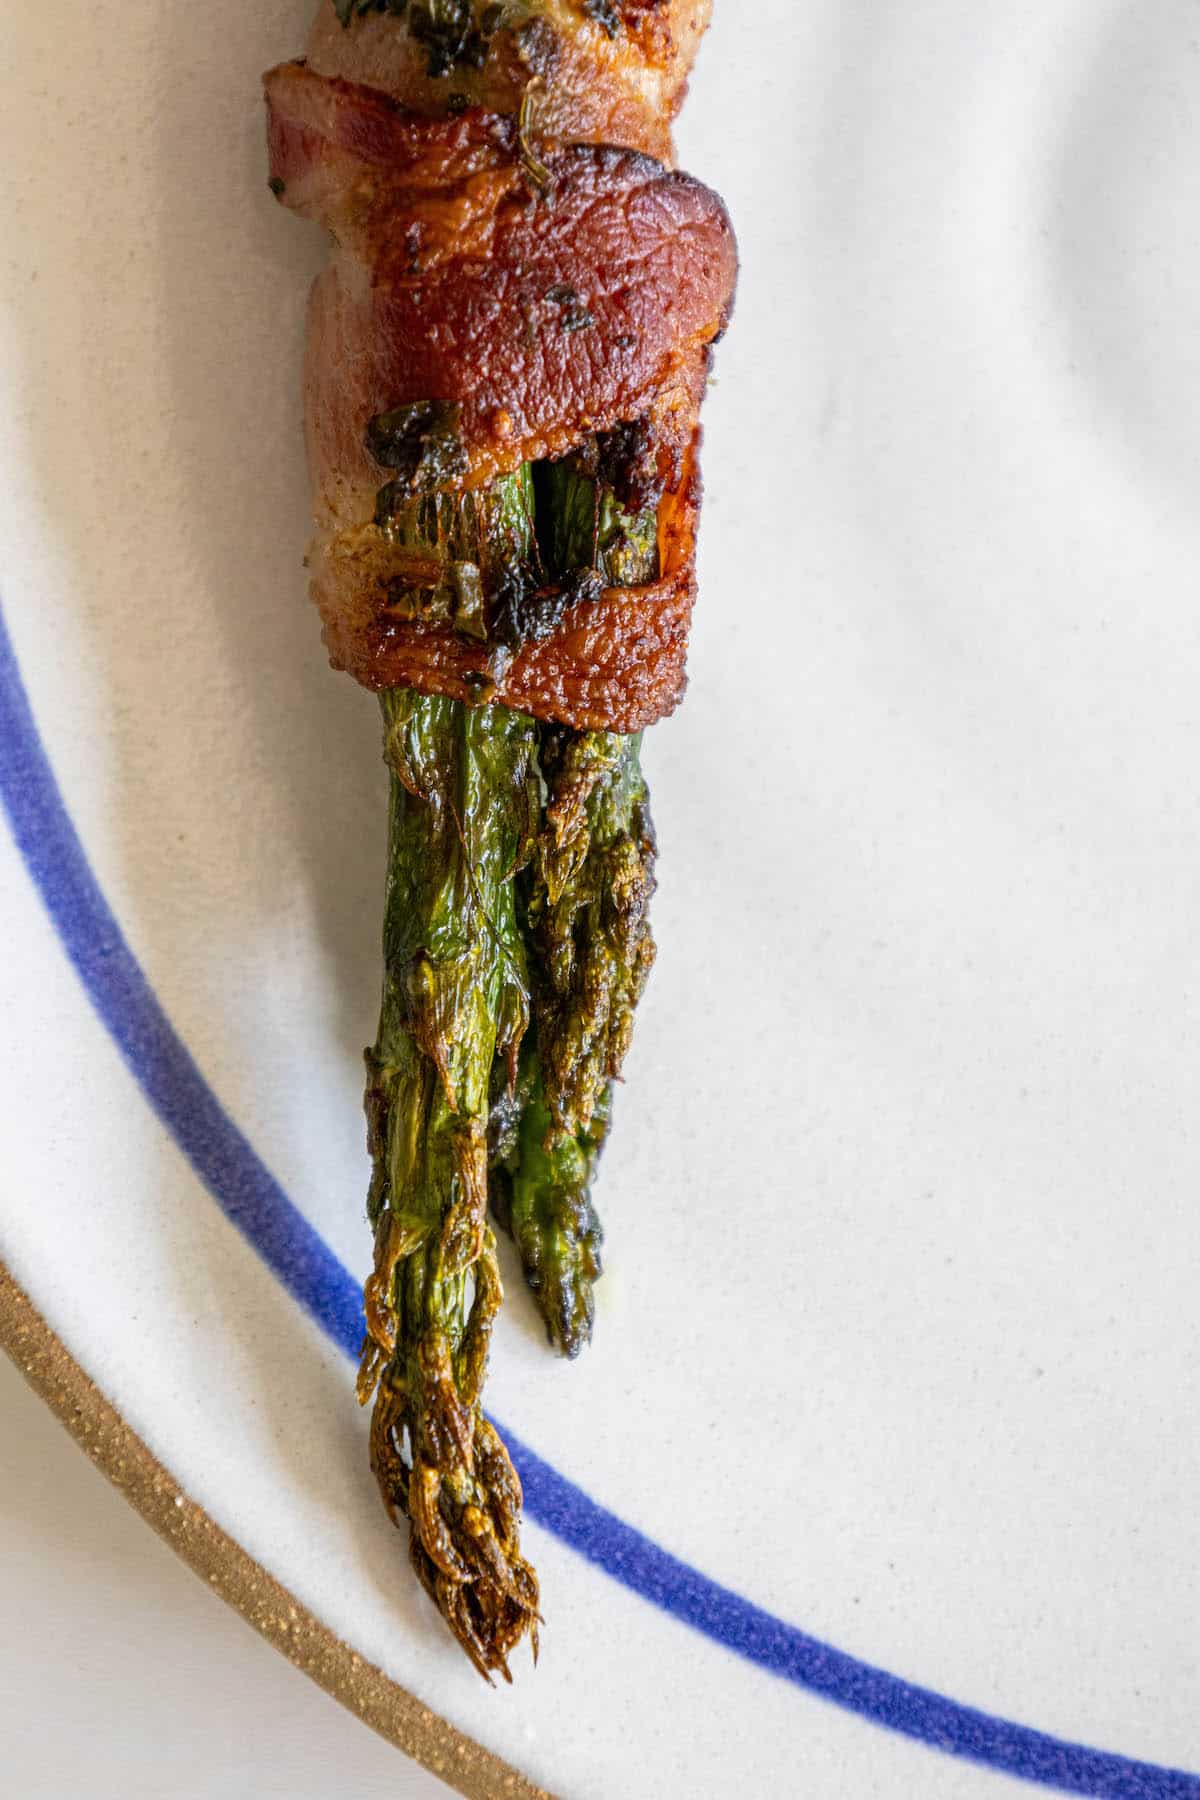 Bacon-wrapped asparagus spears arranged on a plate.